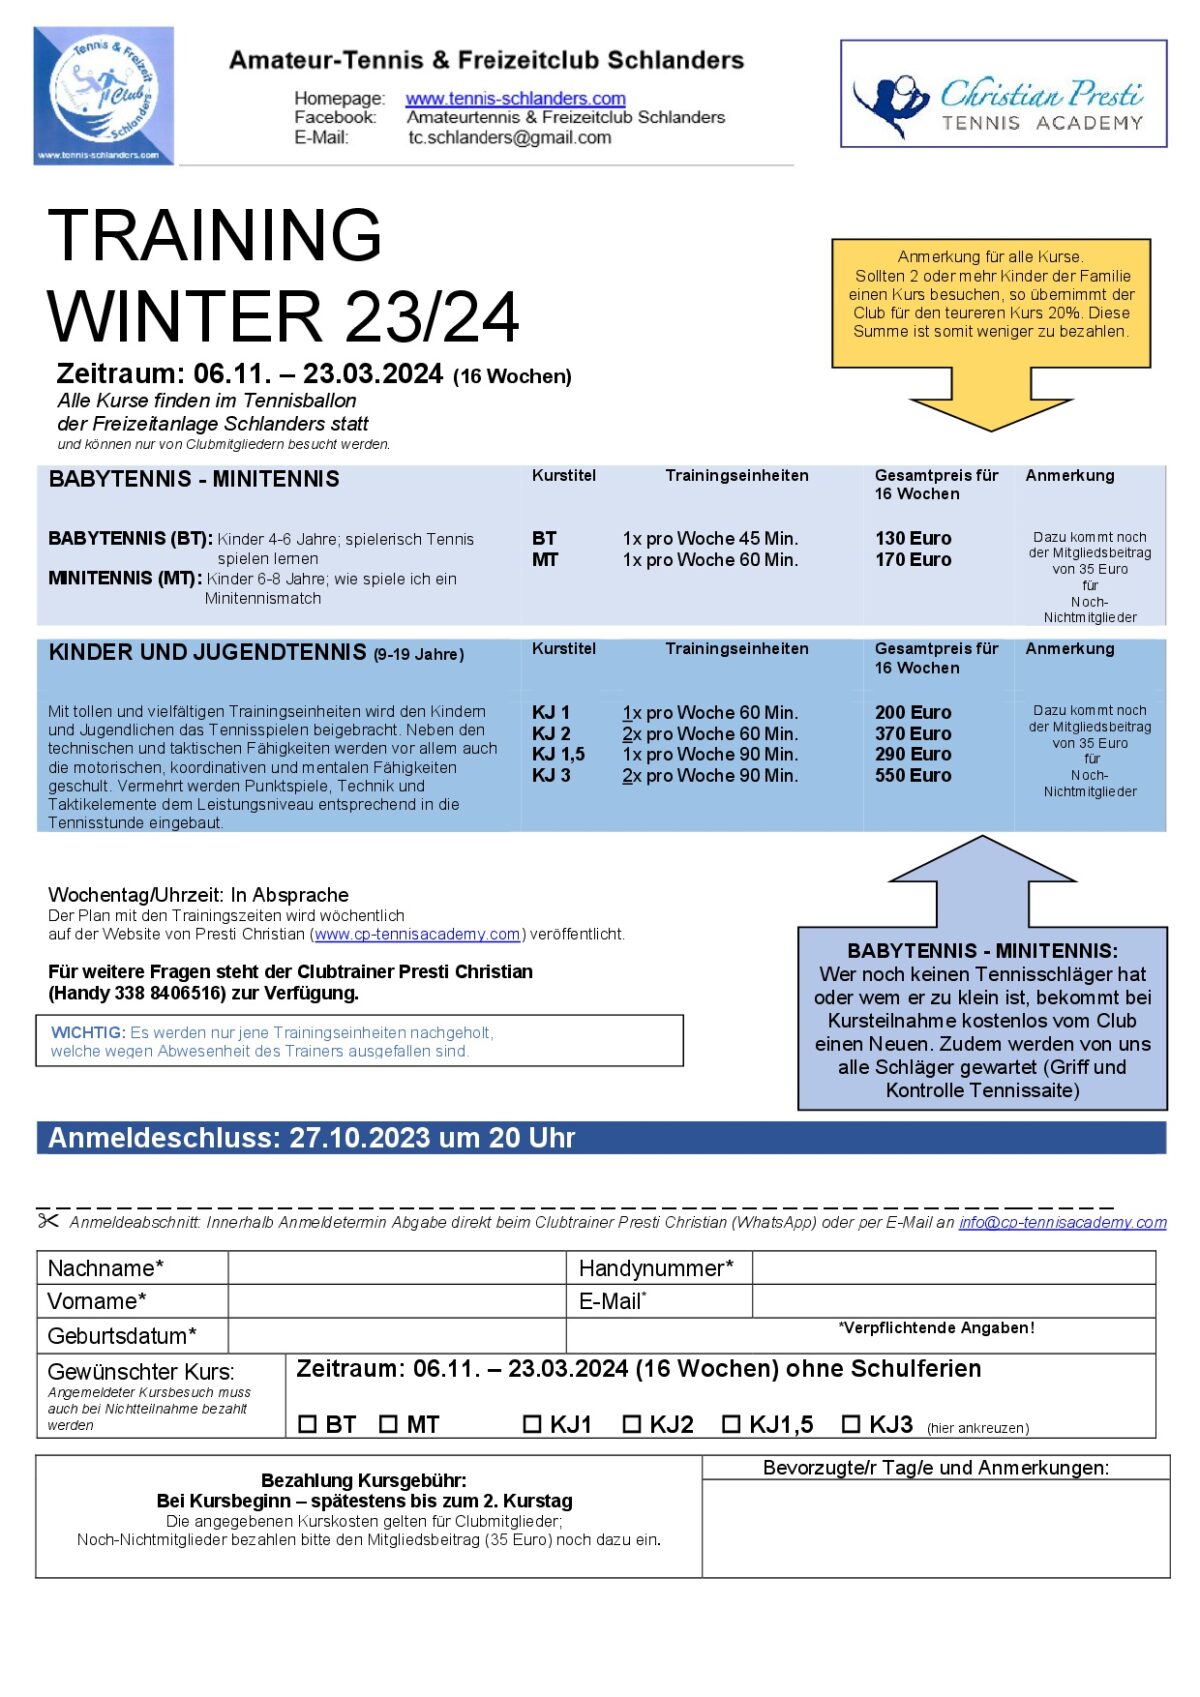 Flyer Winterttraining 2023-24